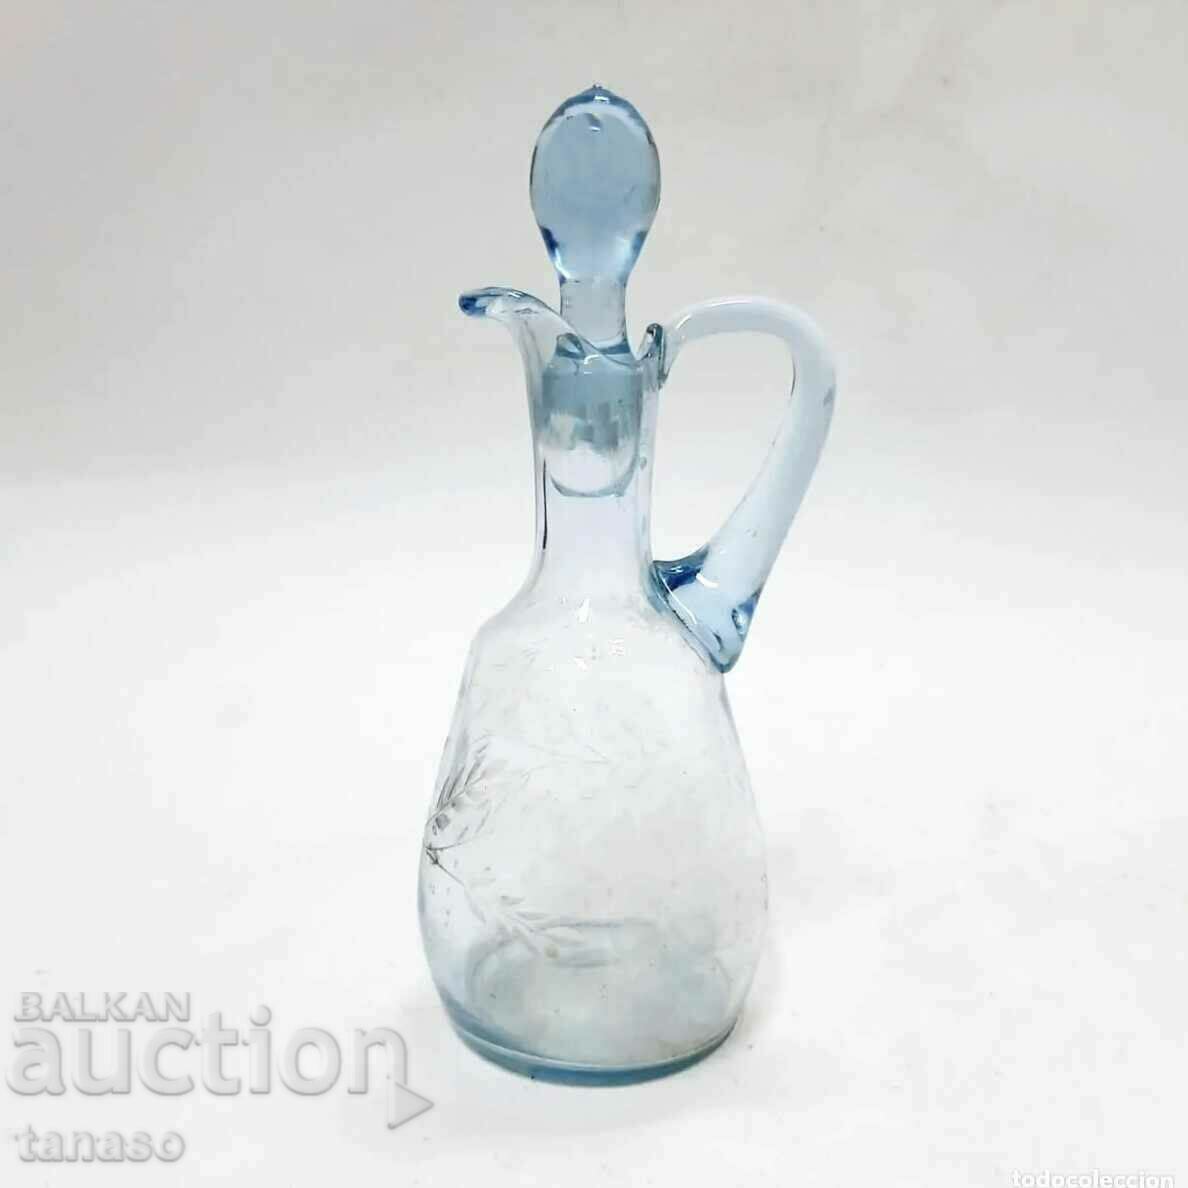 Old light blue glass jug, carafe with stopper(12.3)